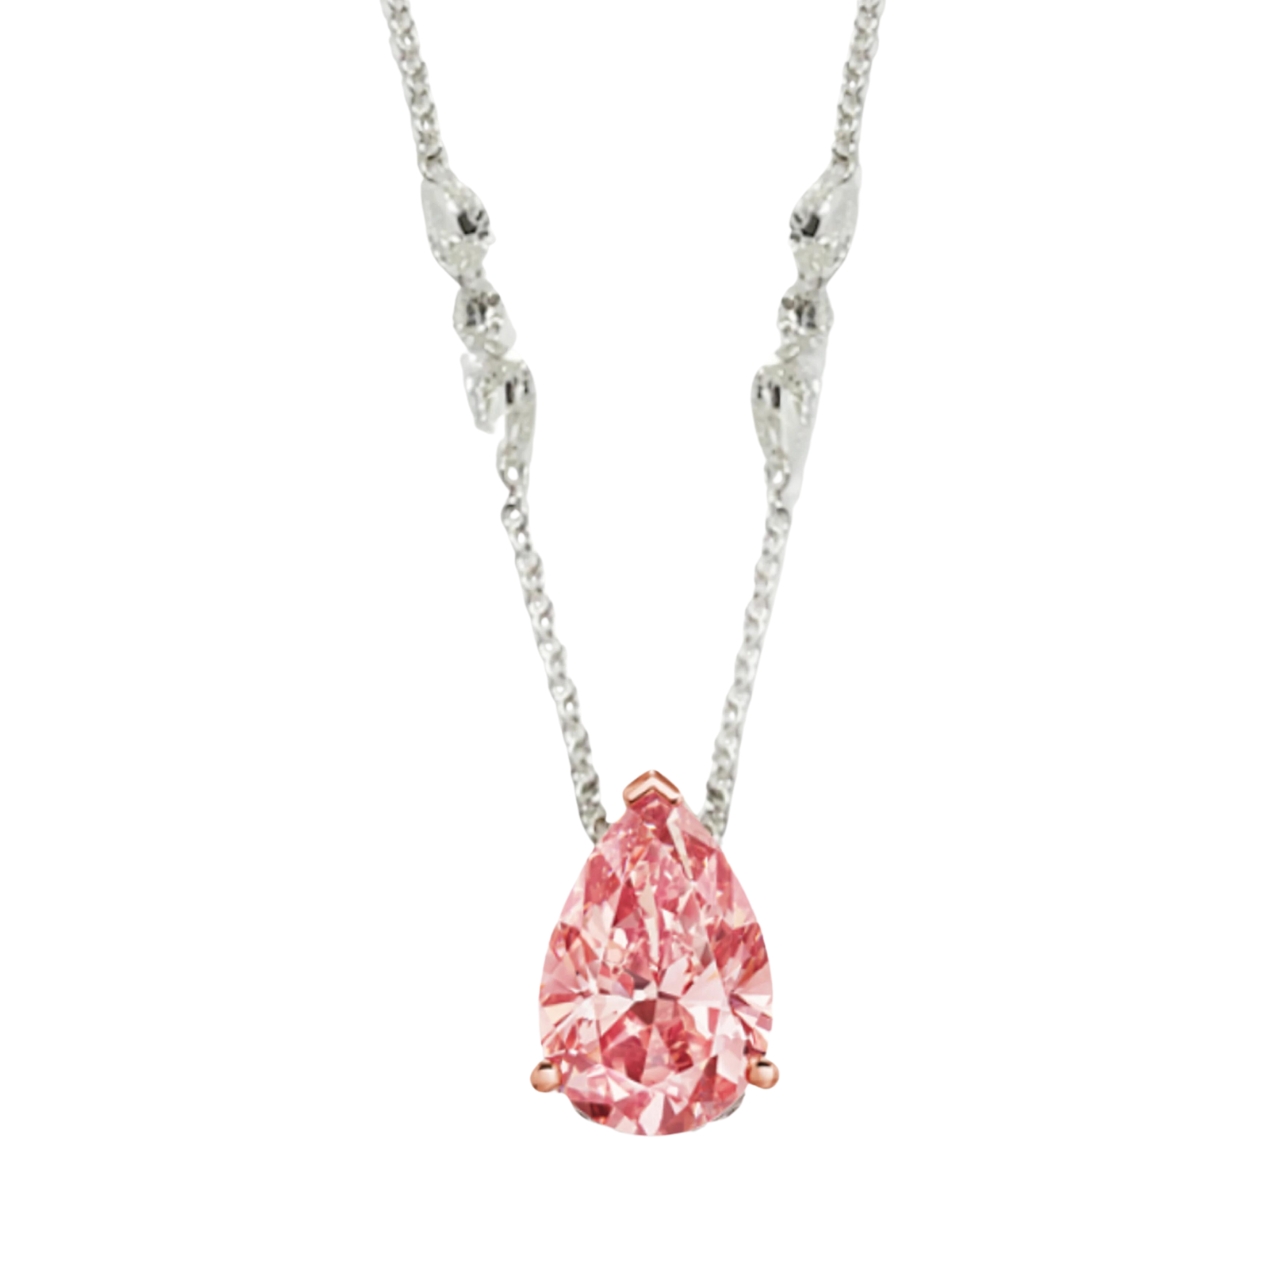 Maria Tash pink pear diamond necklace